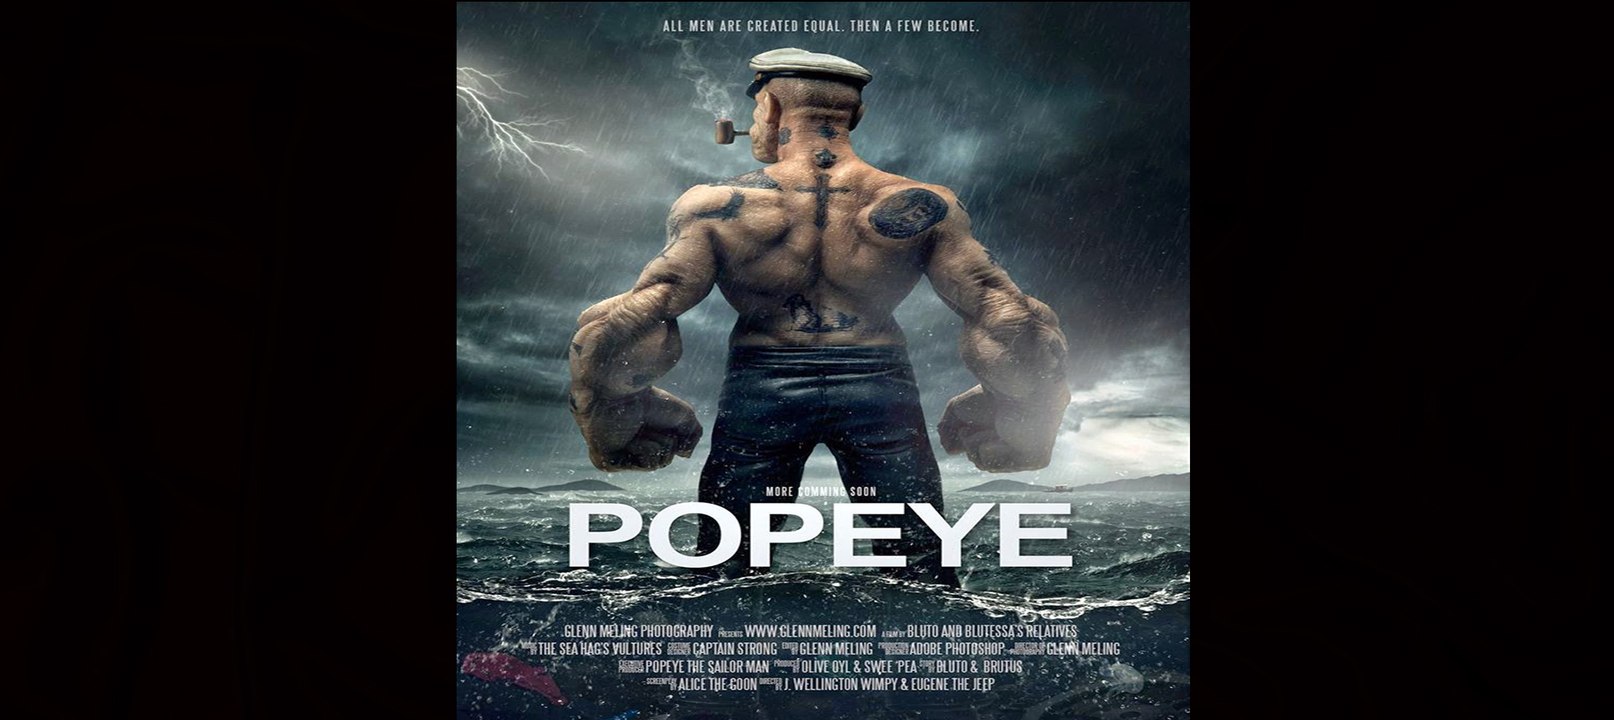 Popeye (2016) Trailer HD video Dailymotion